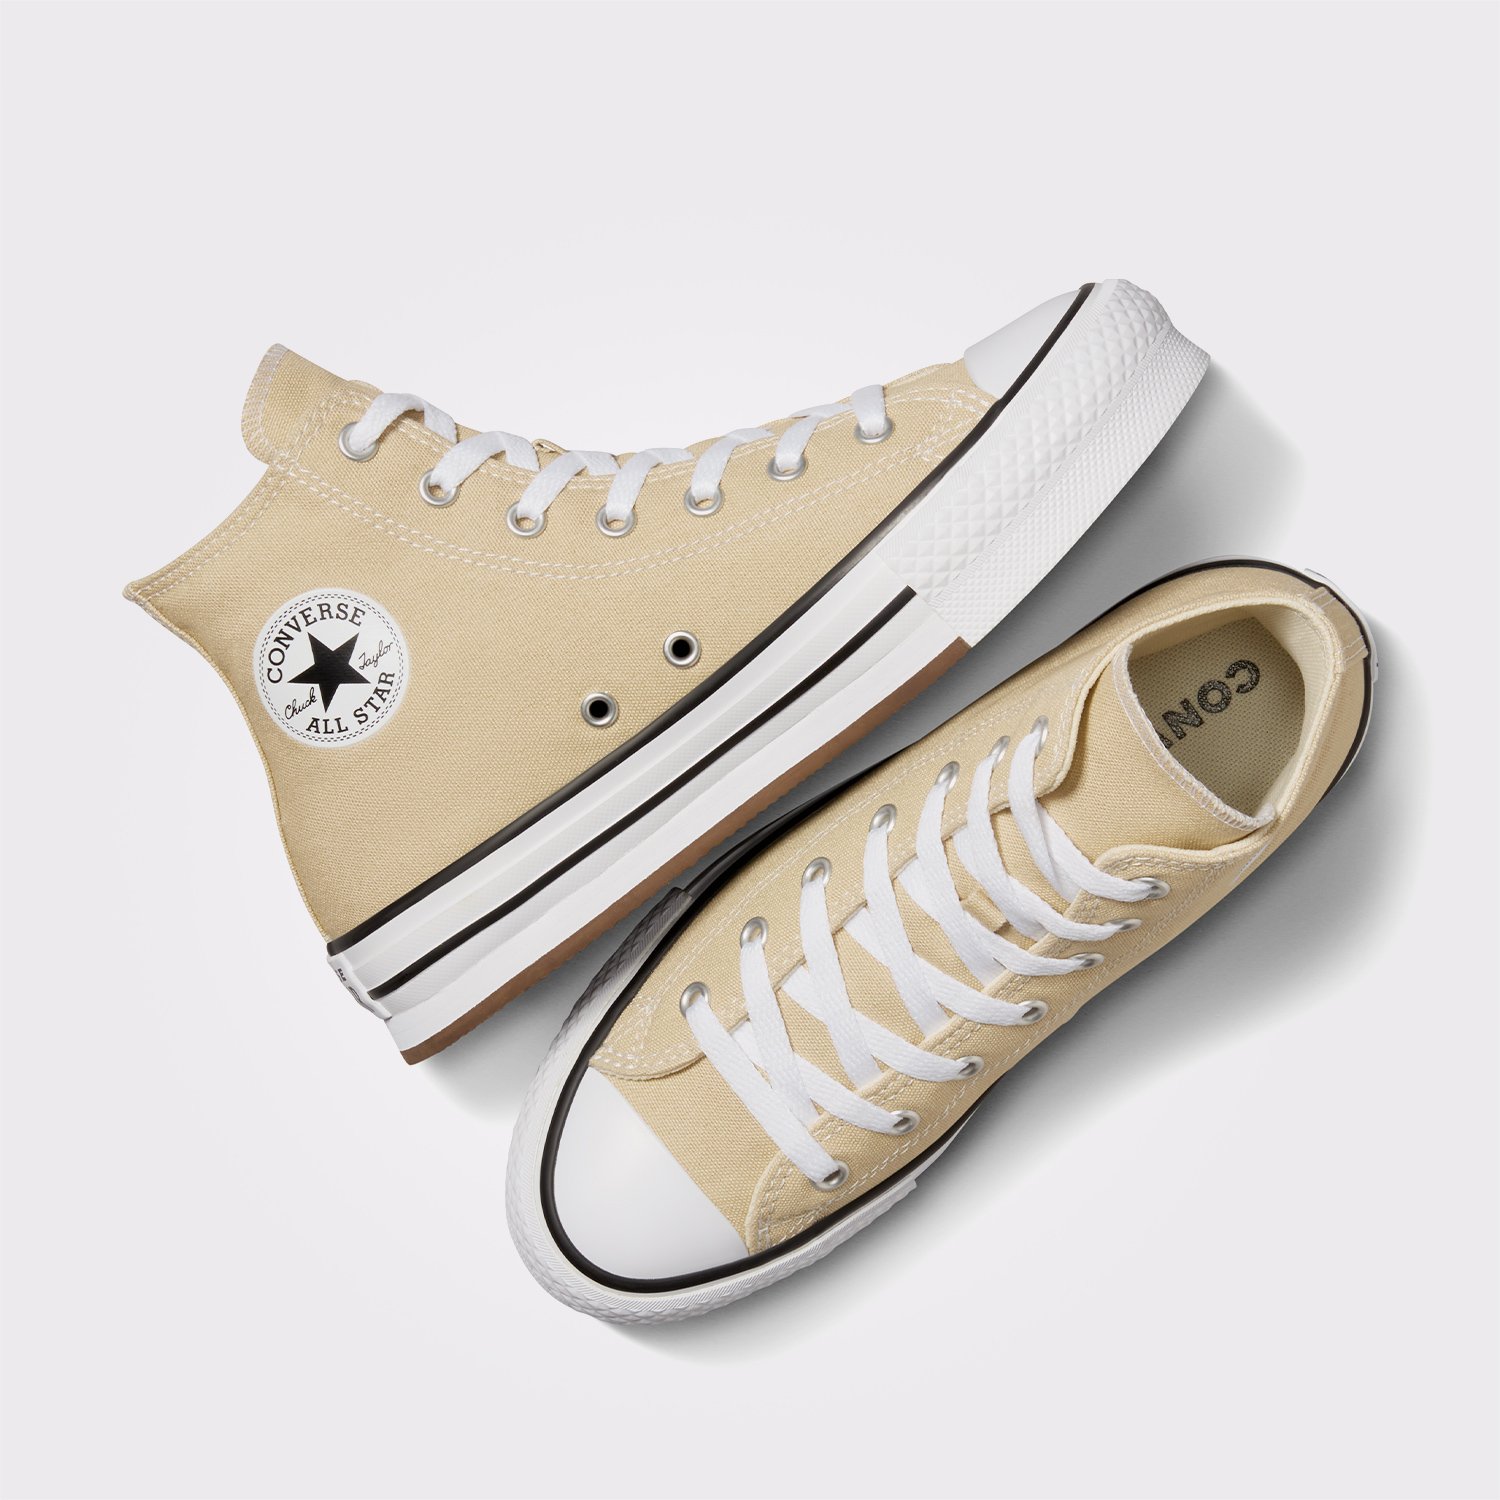 Converse Chuck Taylor All Star Lift Genç Bej Platform Sneaker